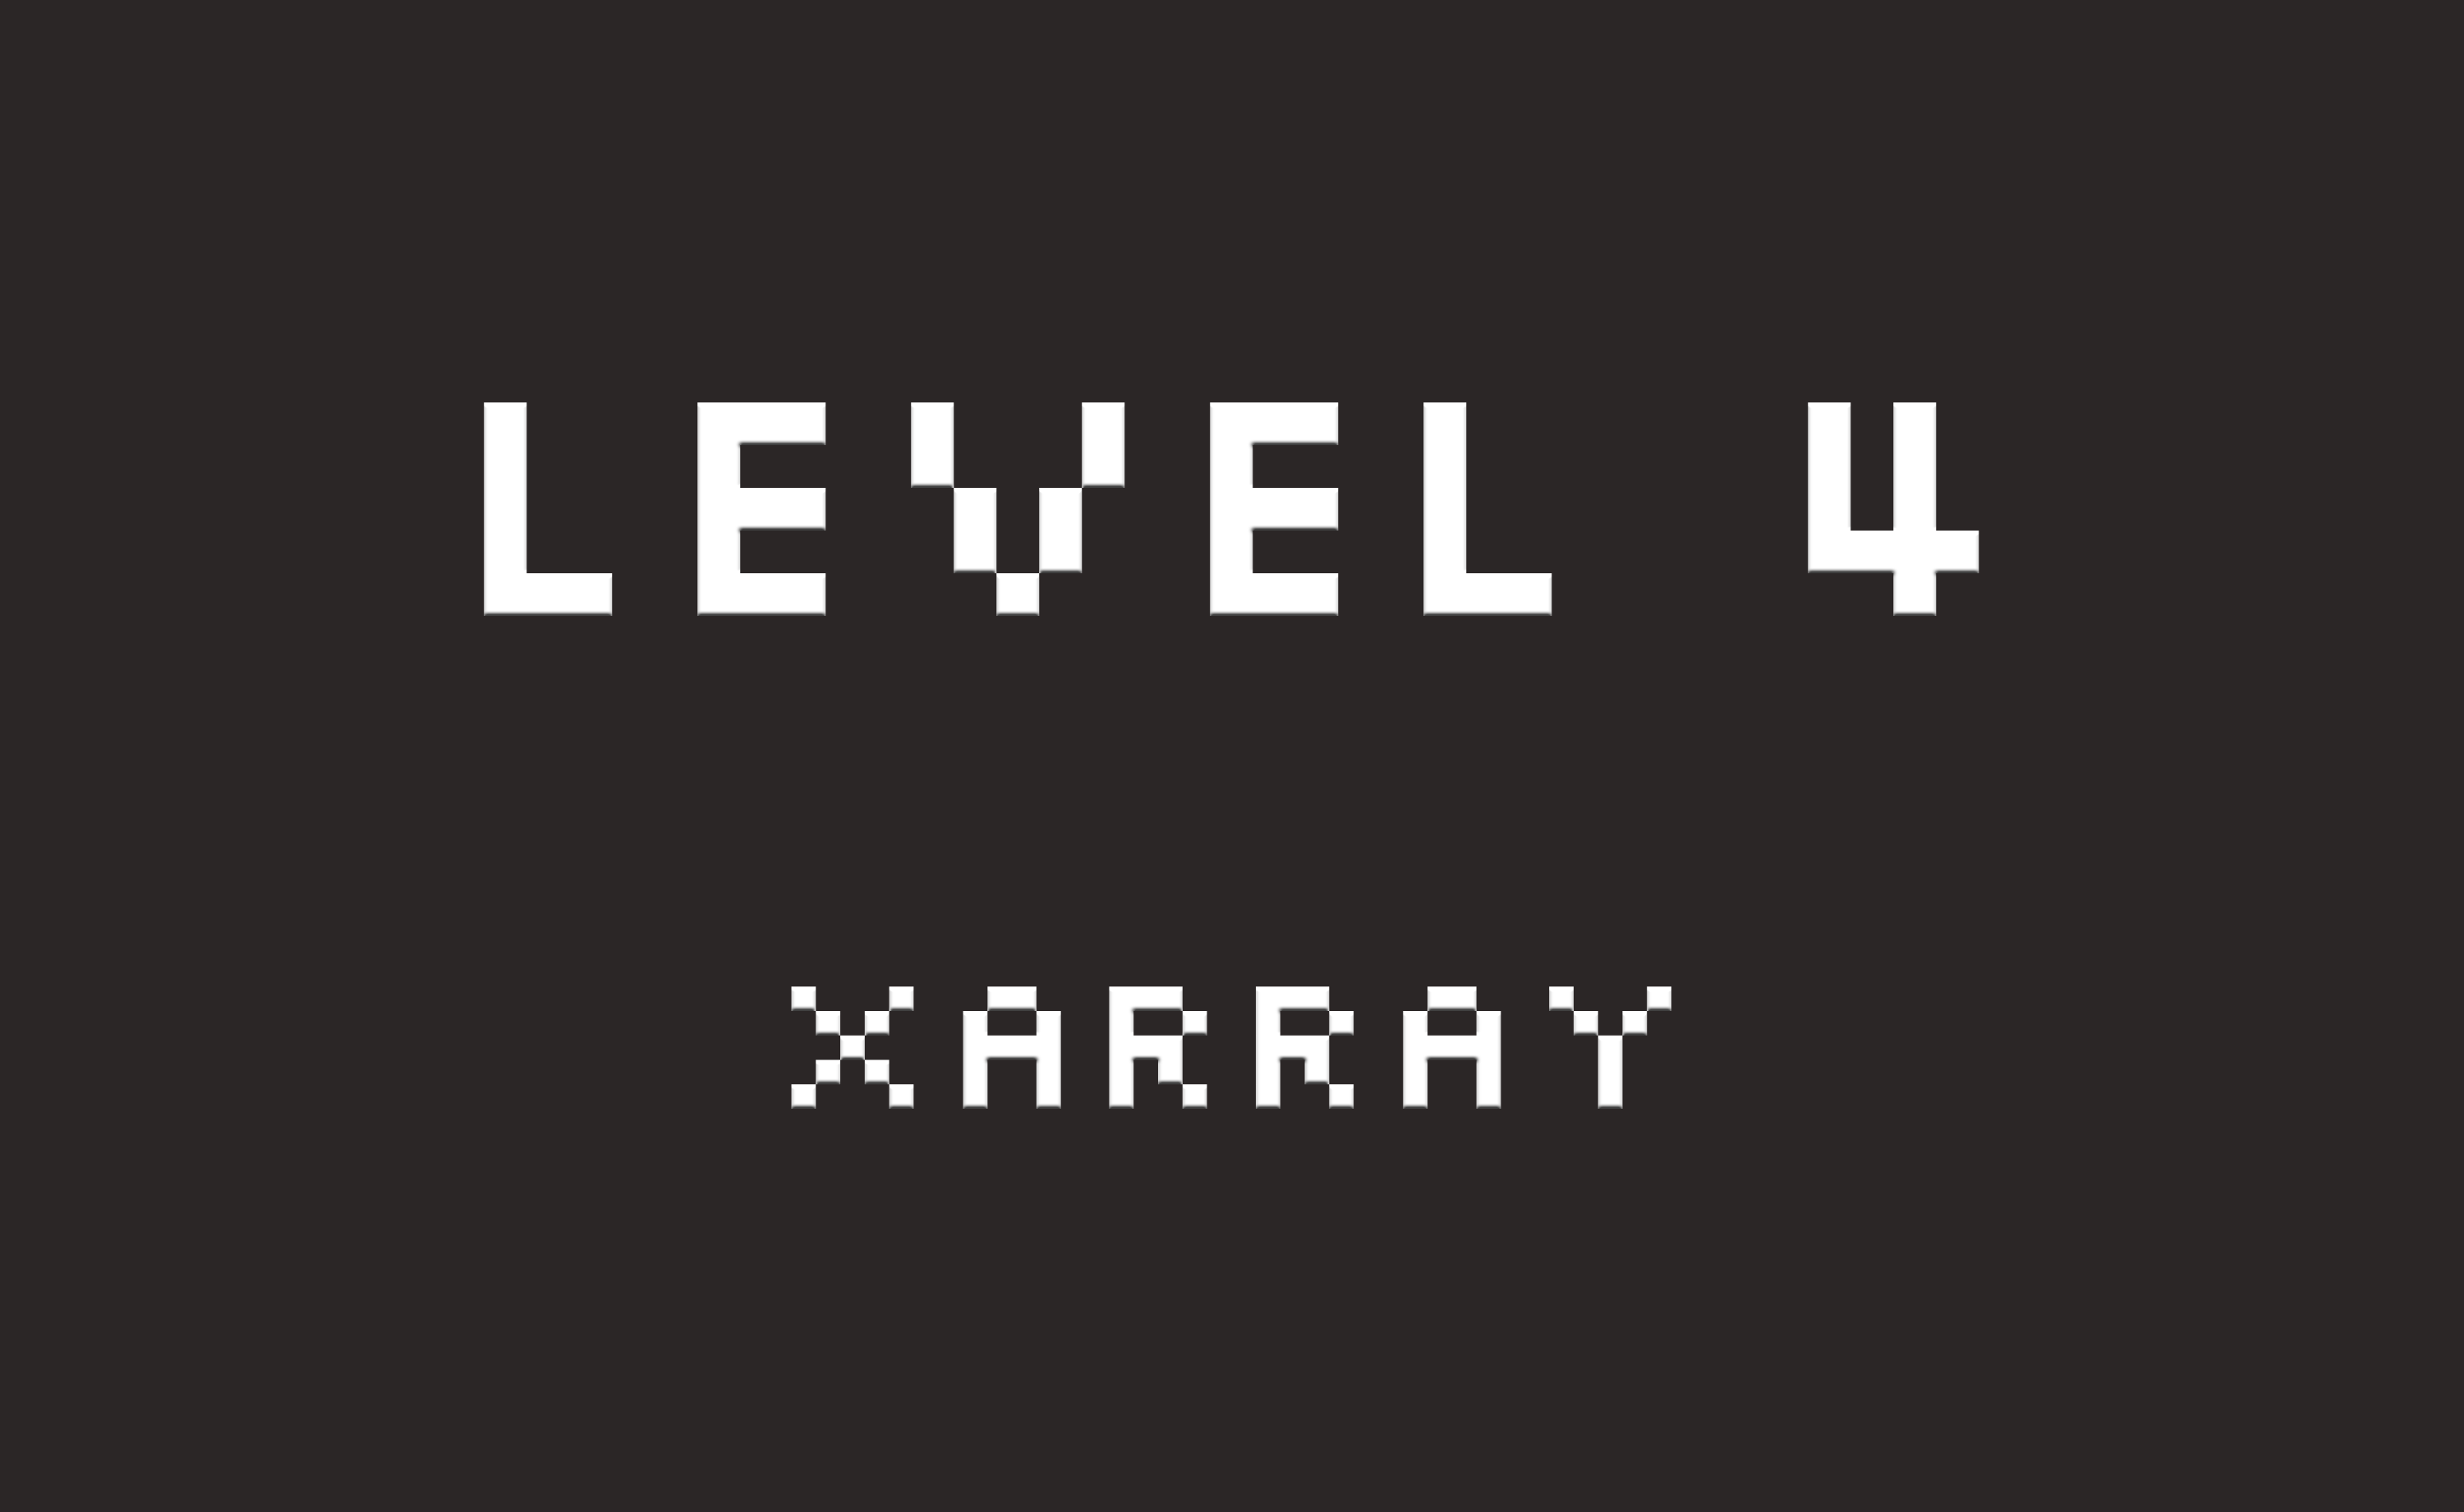 level4